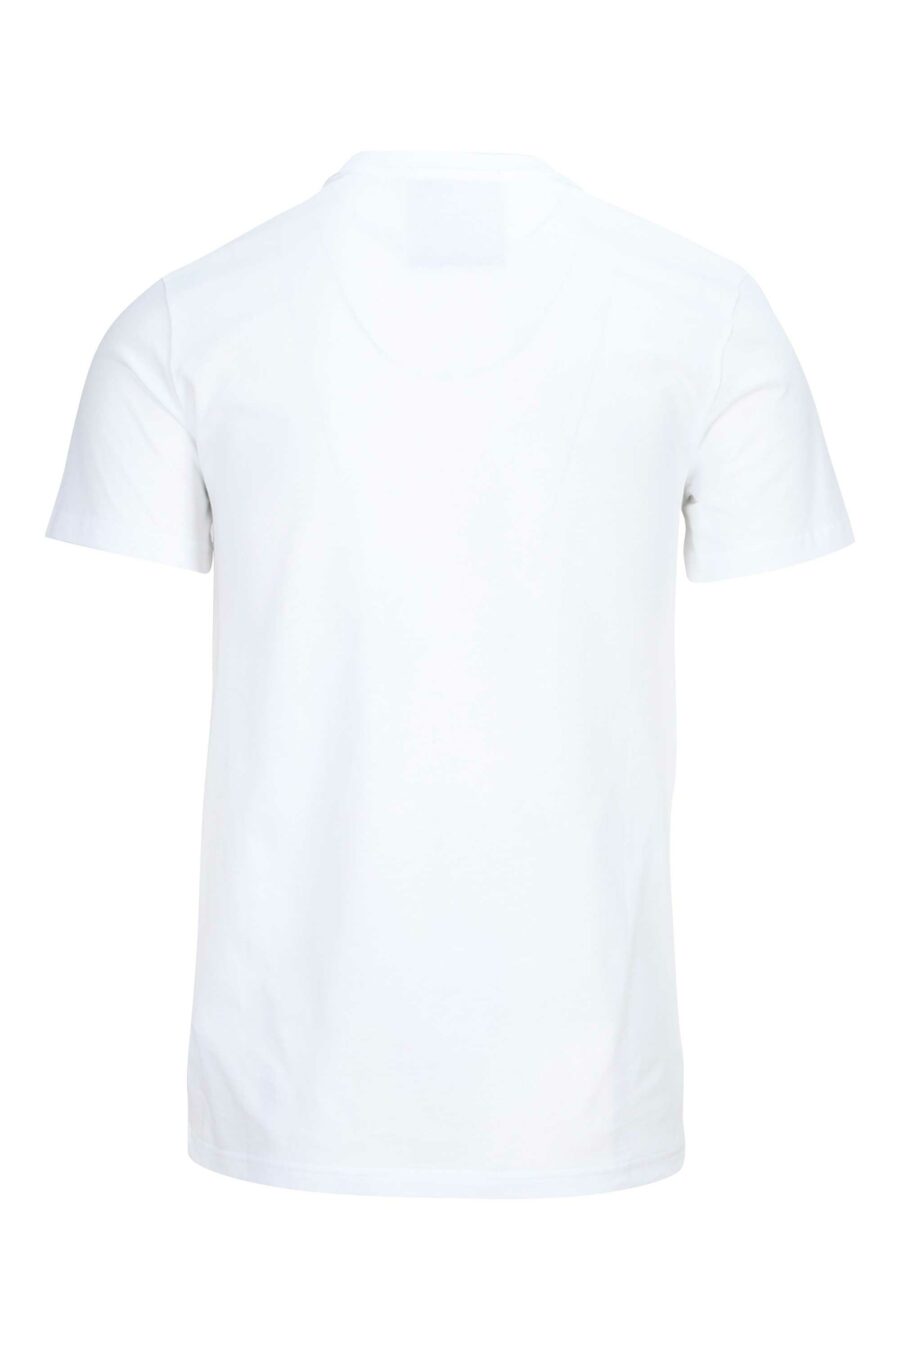 White organic cotton T-shirt with black maxilogue - 889316649031 1